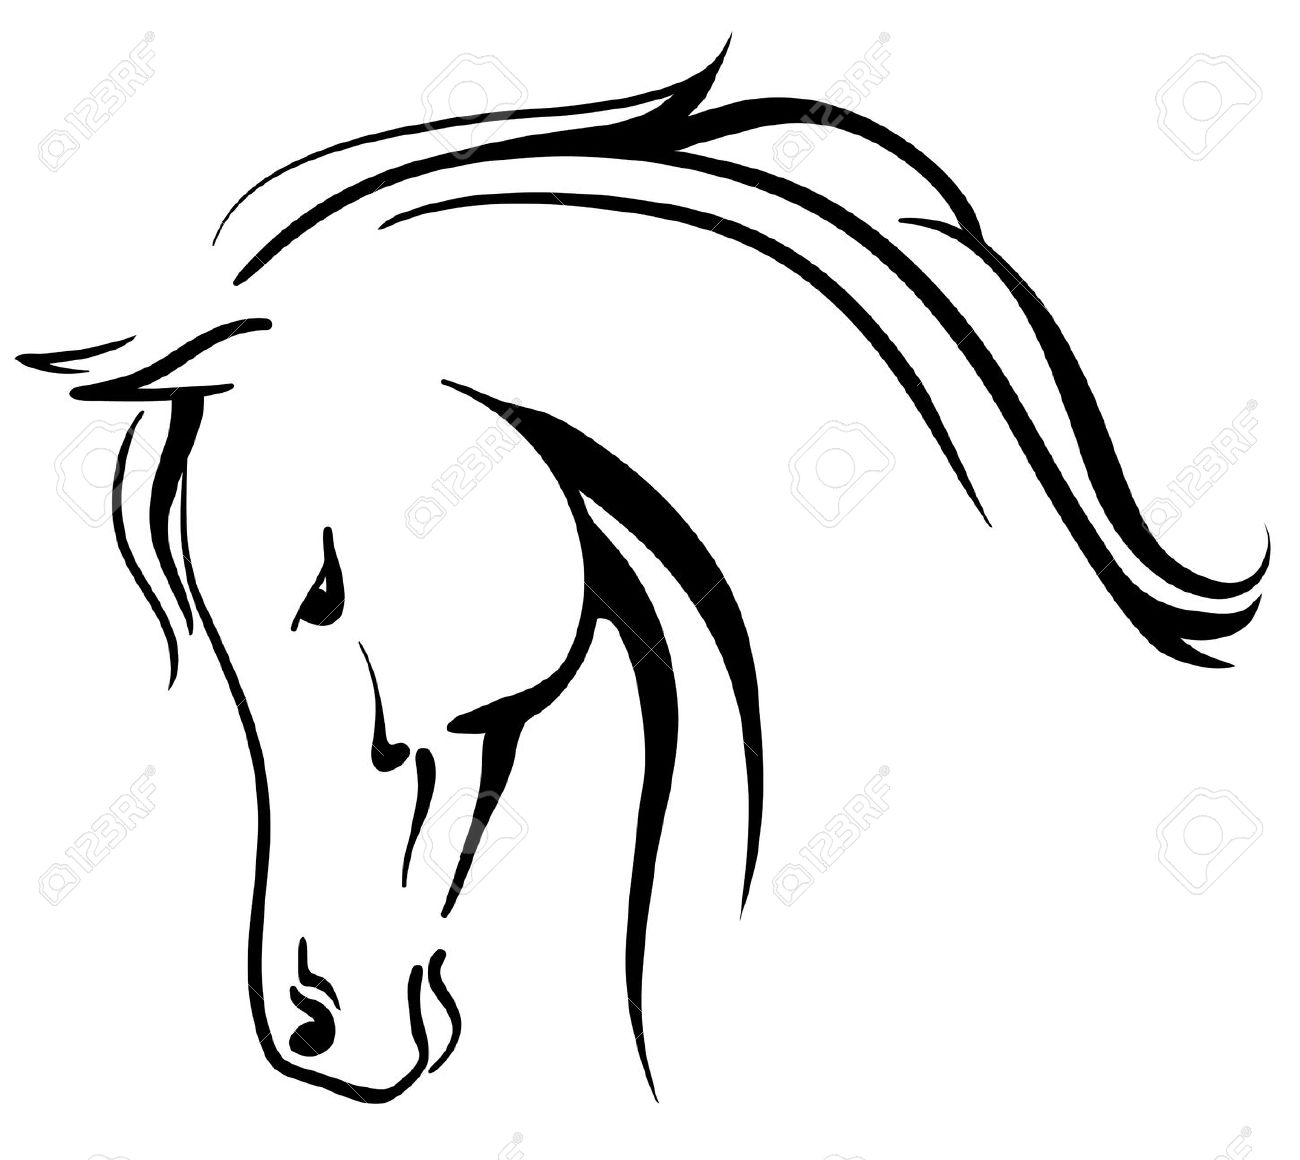 horse head clip art - Horse Head Clip Art